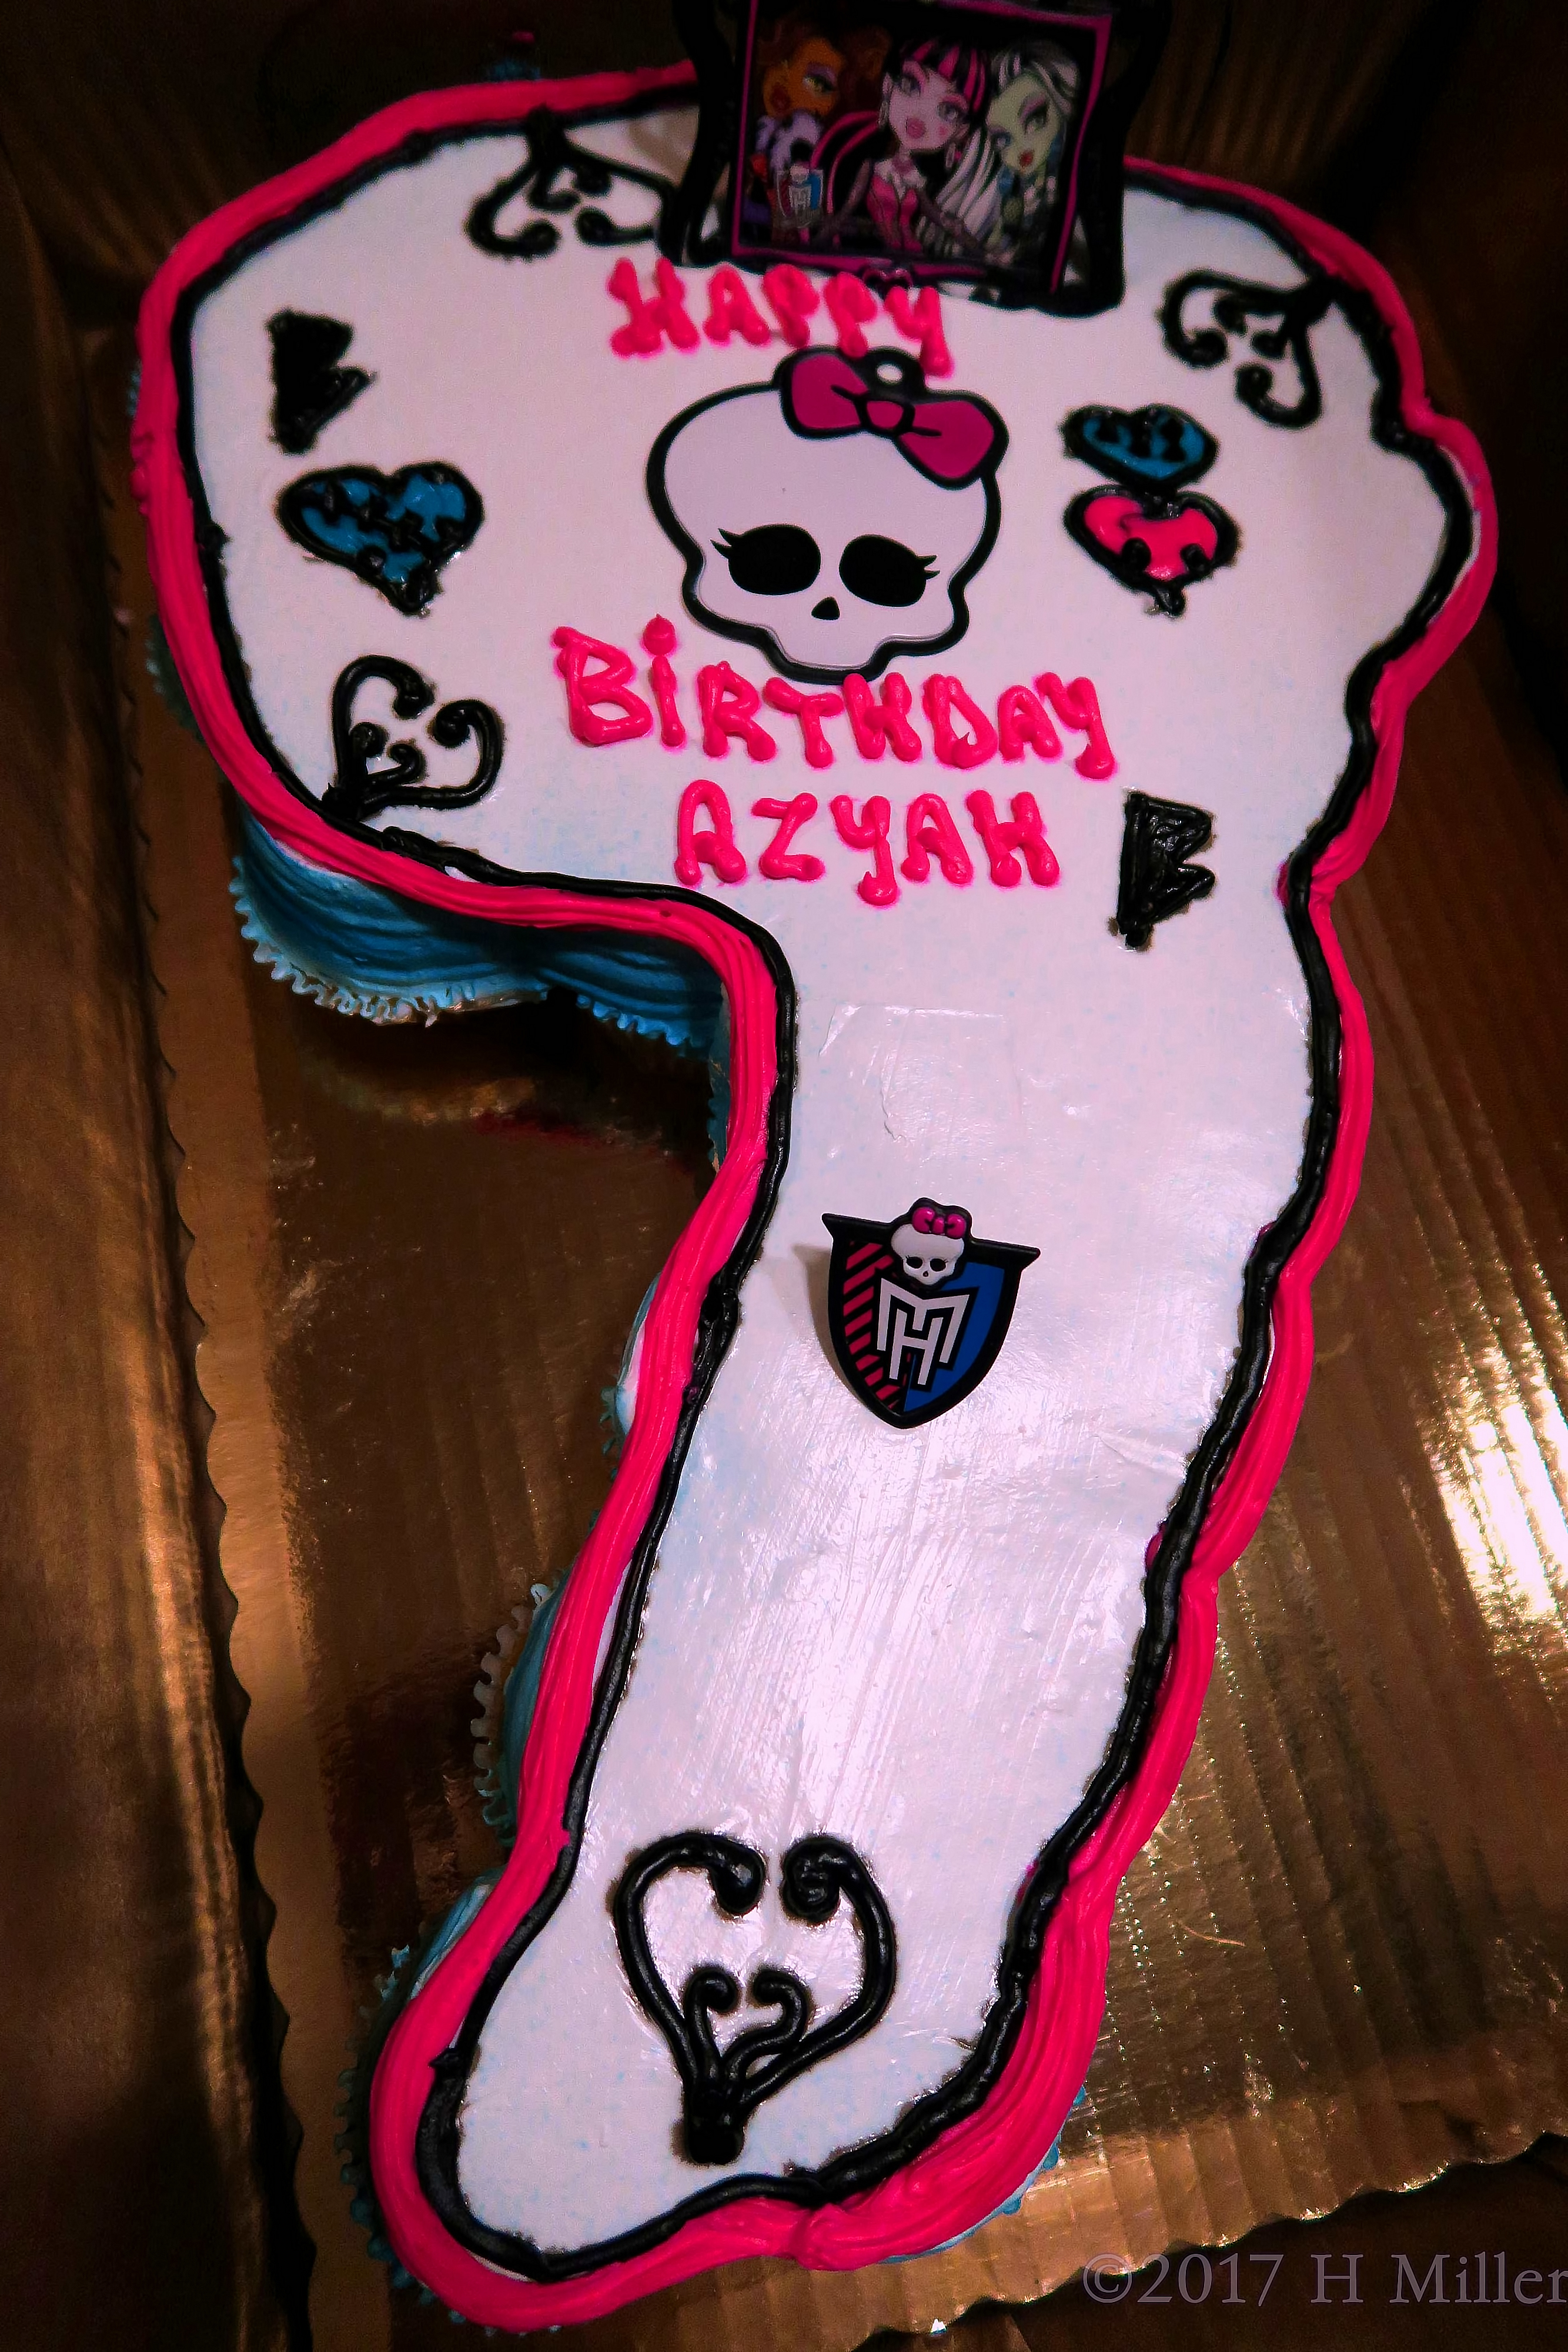 The Monster High Themed Birthday Cake! 